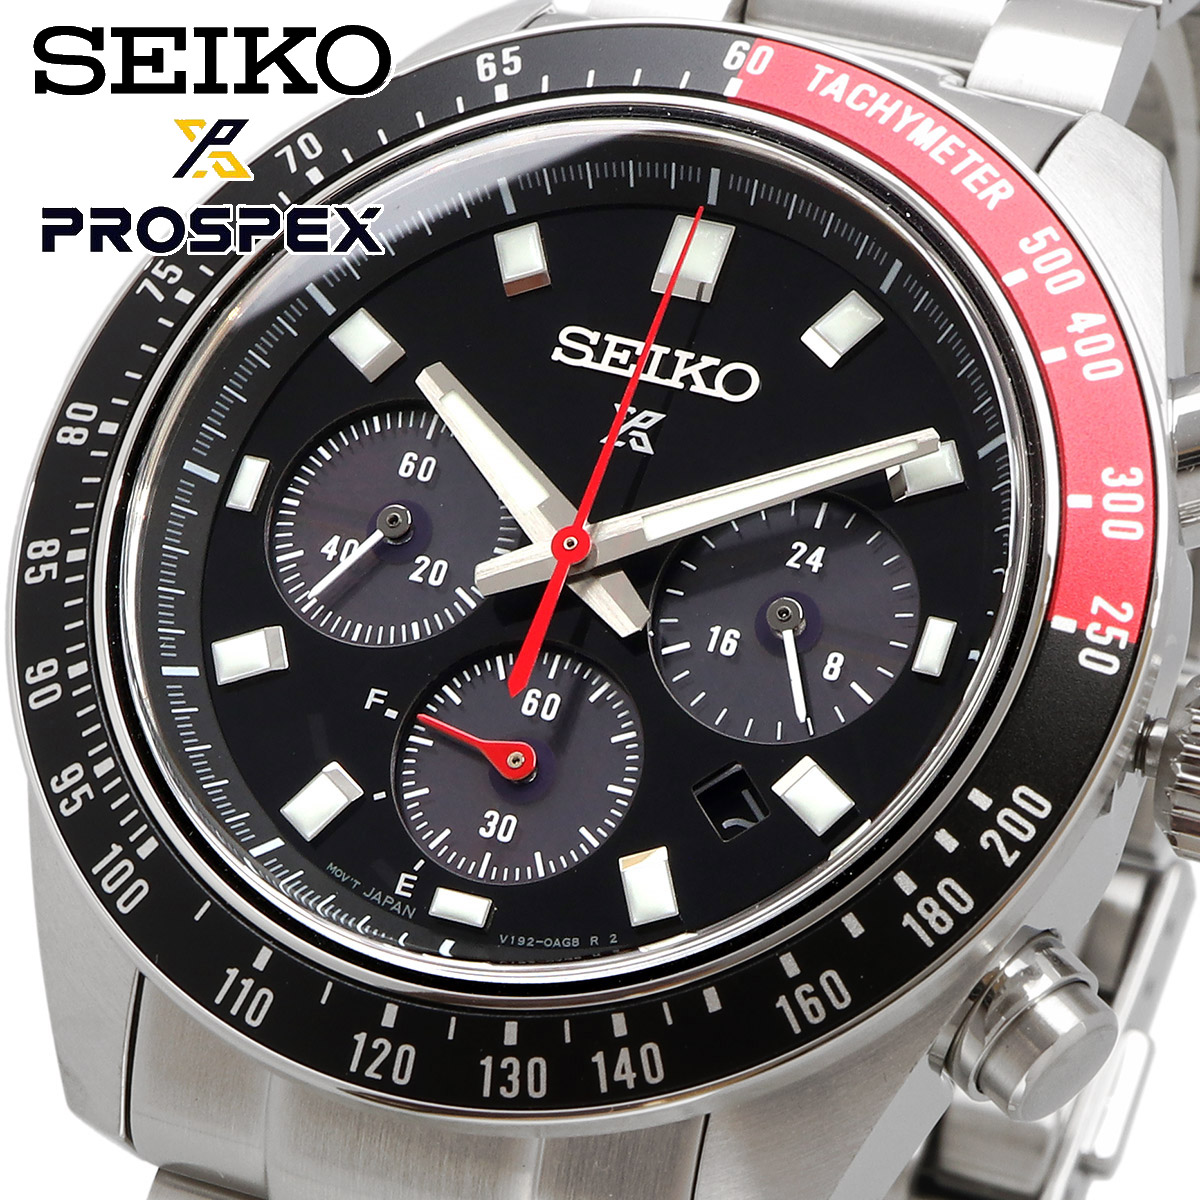 SEIKO セイコー 腕時計 メンズ 海外モデル PROSPEX プロスペックス